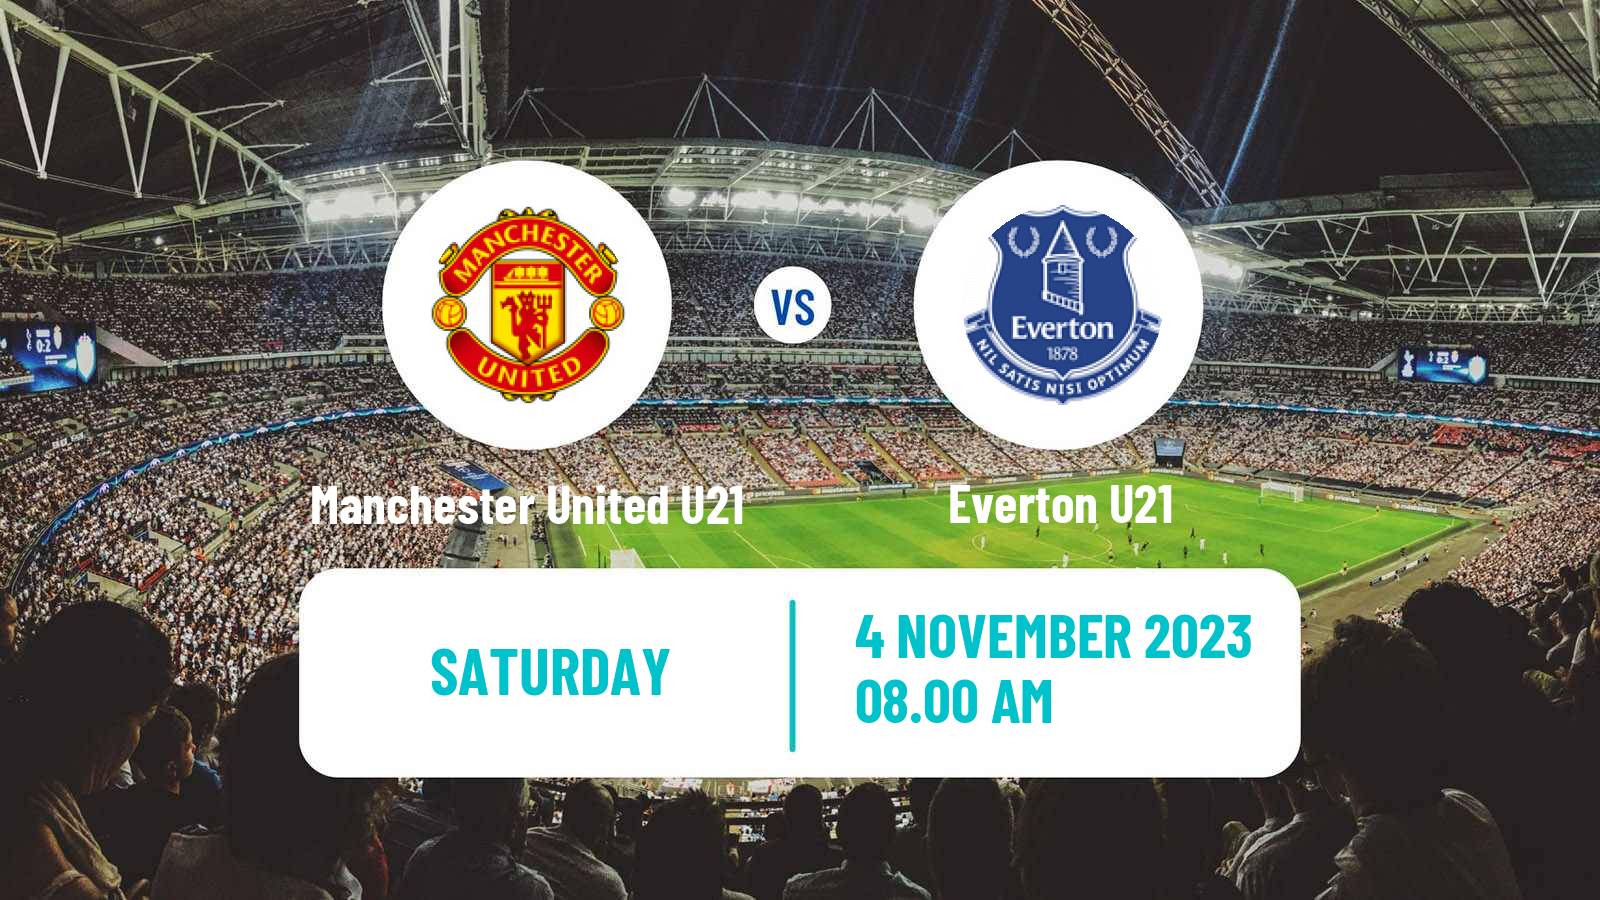 Soccer English Premier League 2 Manchester United U21 - Everton U21